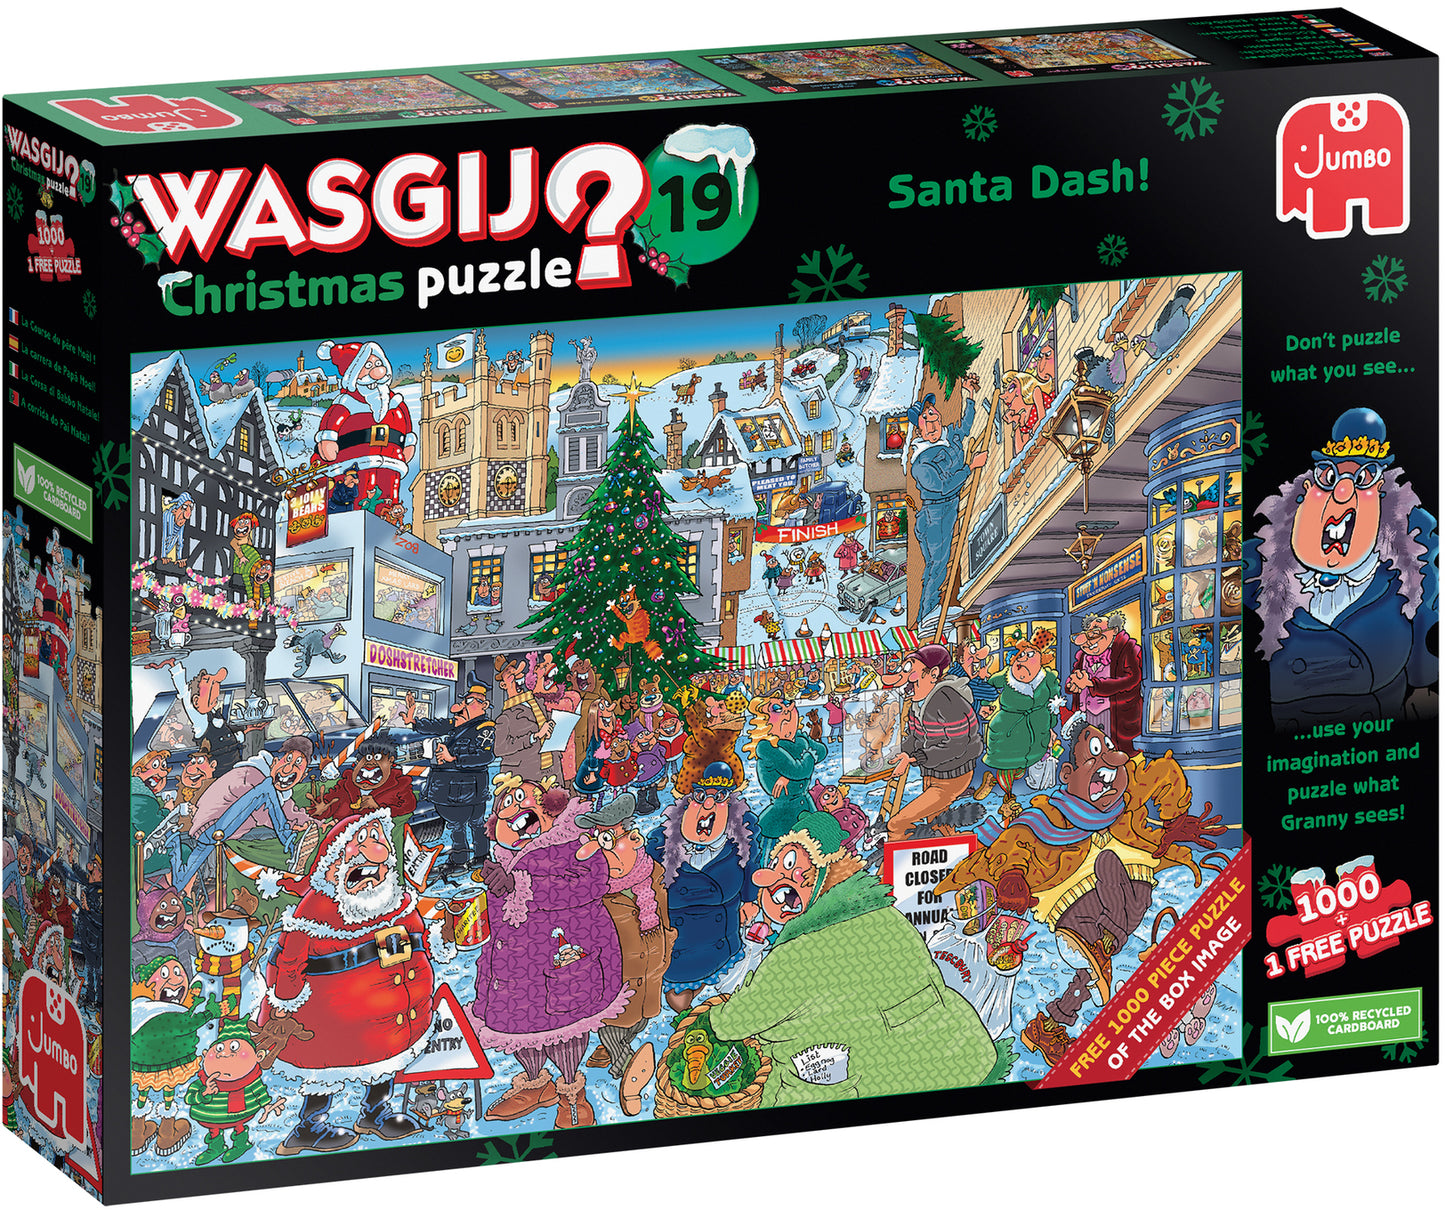 Wasgij - Christmas 19 Santa Dash - 1000 Piece Jigsaw Puzzles